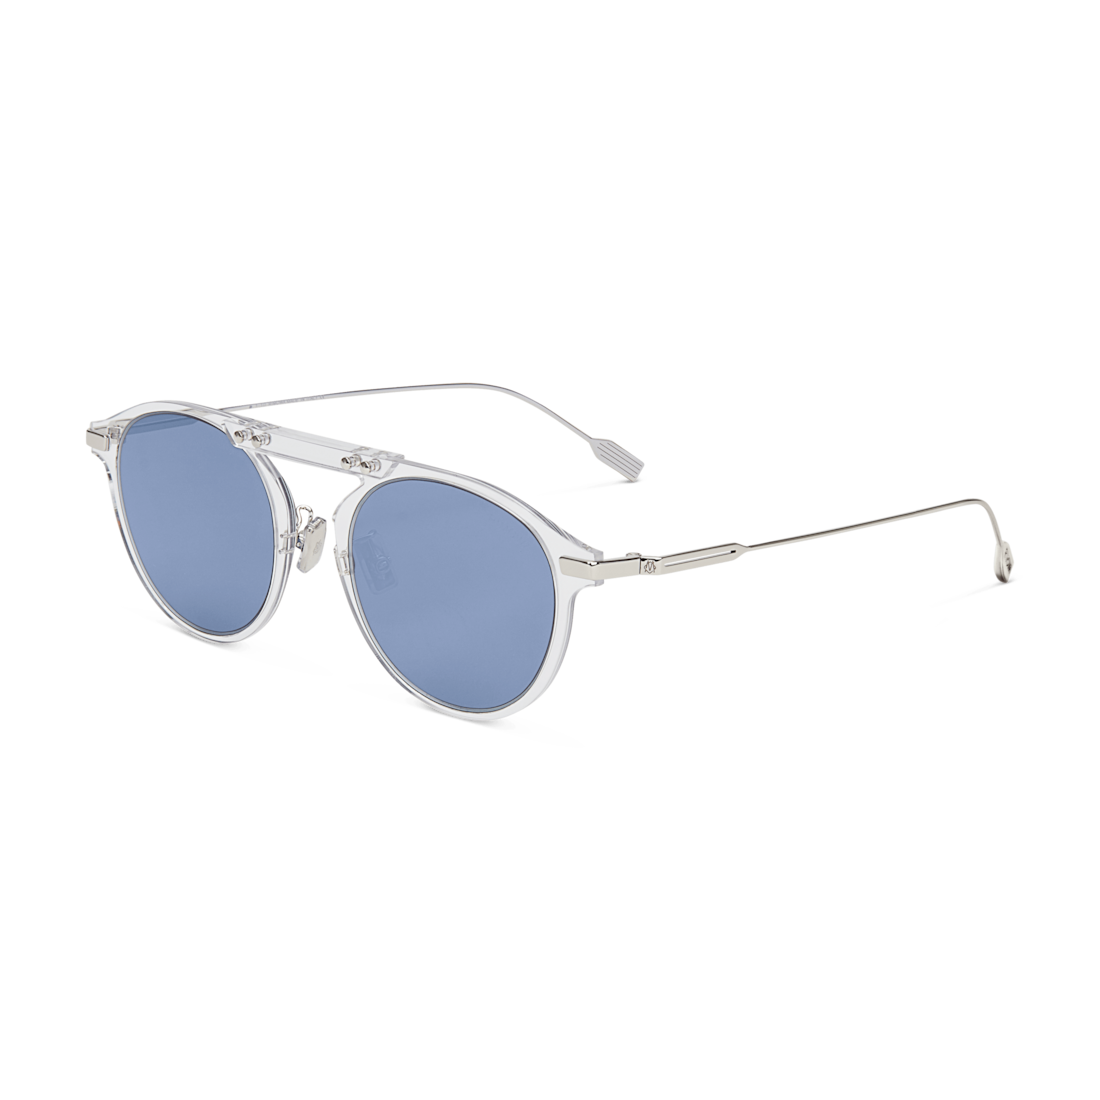 Round Transparent Sunglasses with Navy Blue Lenses | RIMOWA